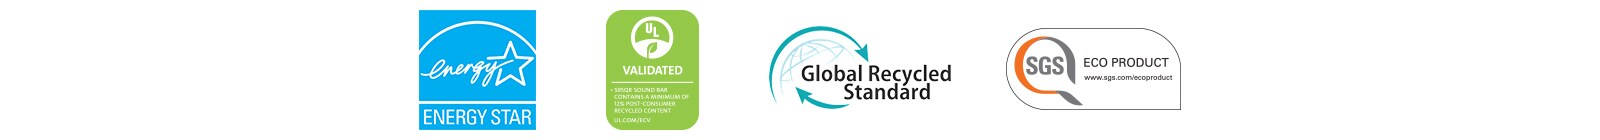 Логотипы ENERGY STAR, UL VALIDATED, Global Recycled Standard, SGS ECO PRODUCT.